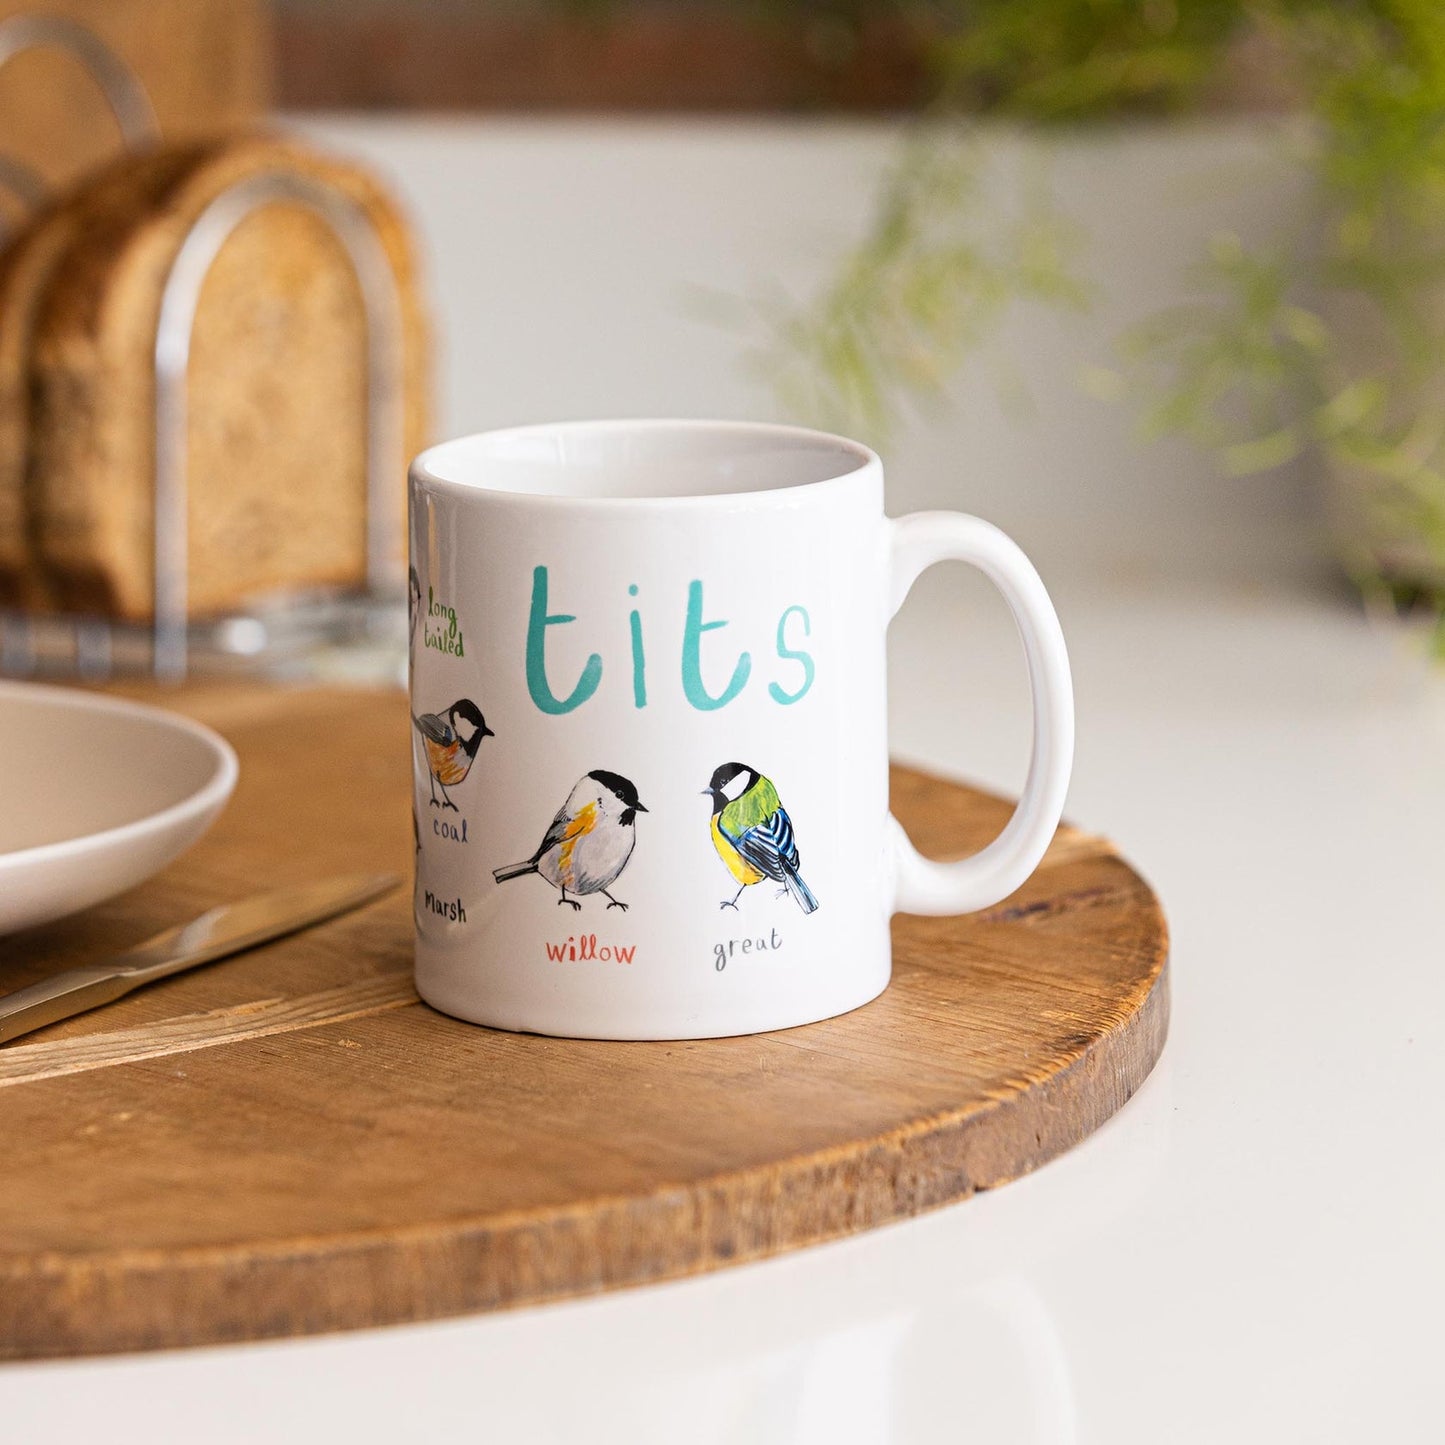 Tits cheeky bird art illustrated ceramic mug